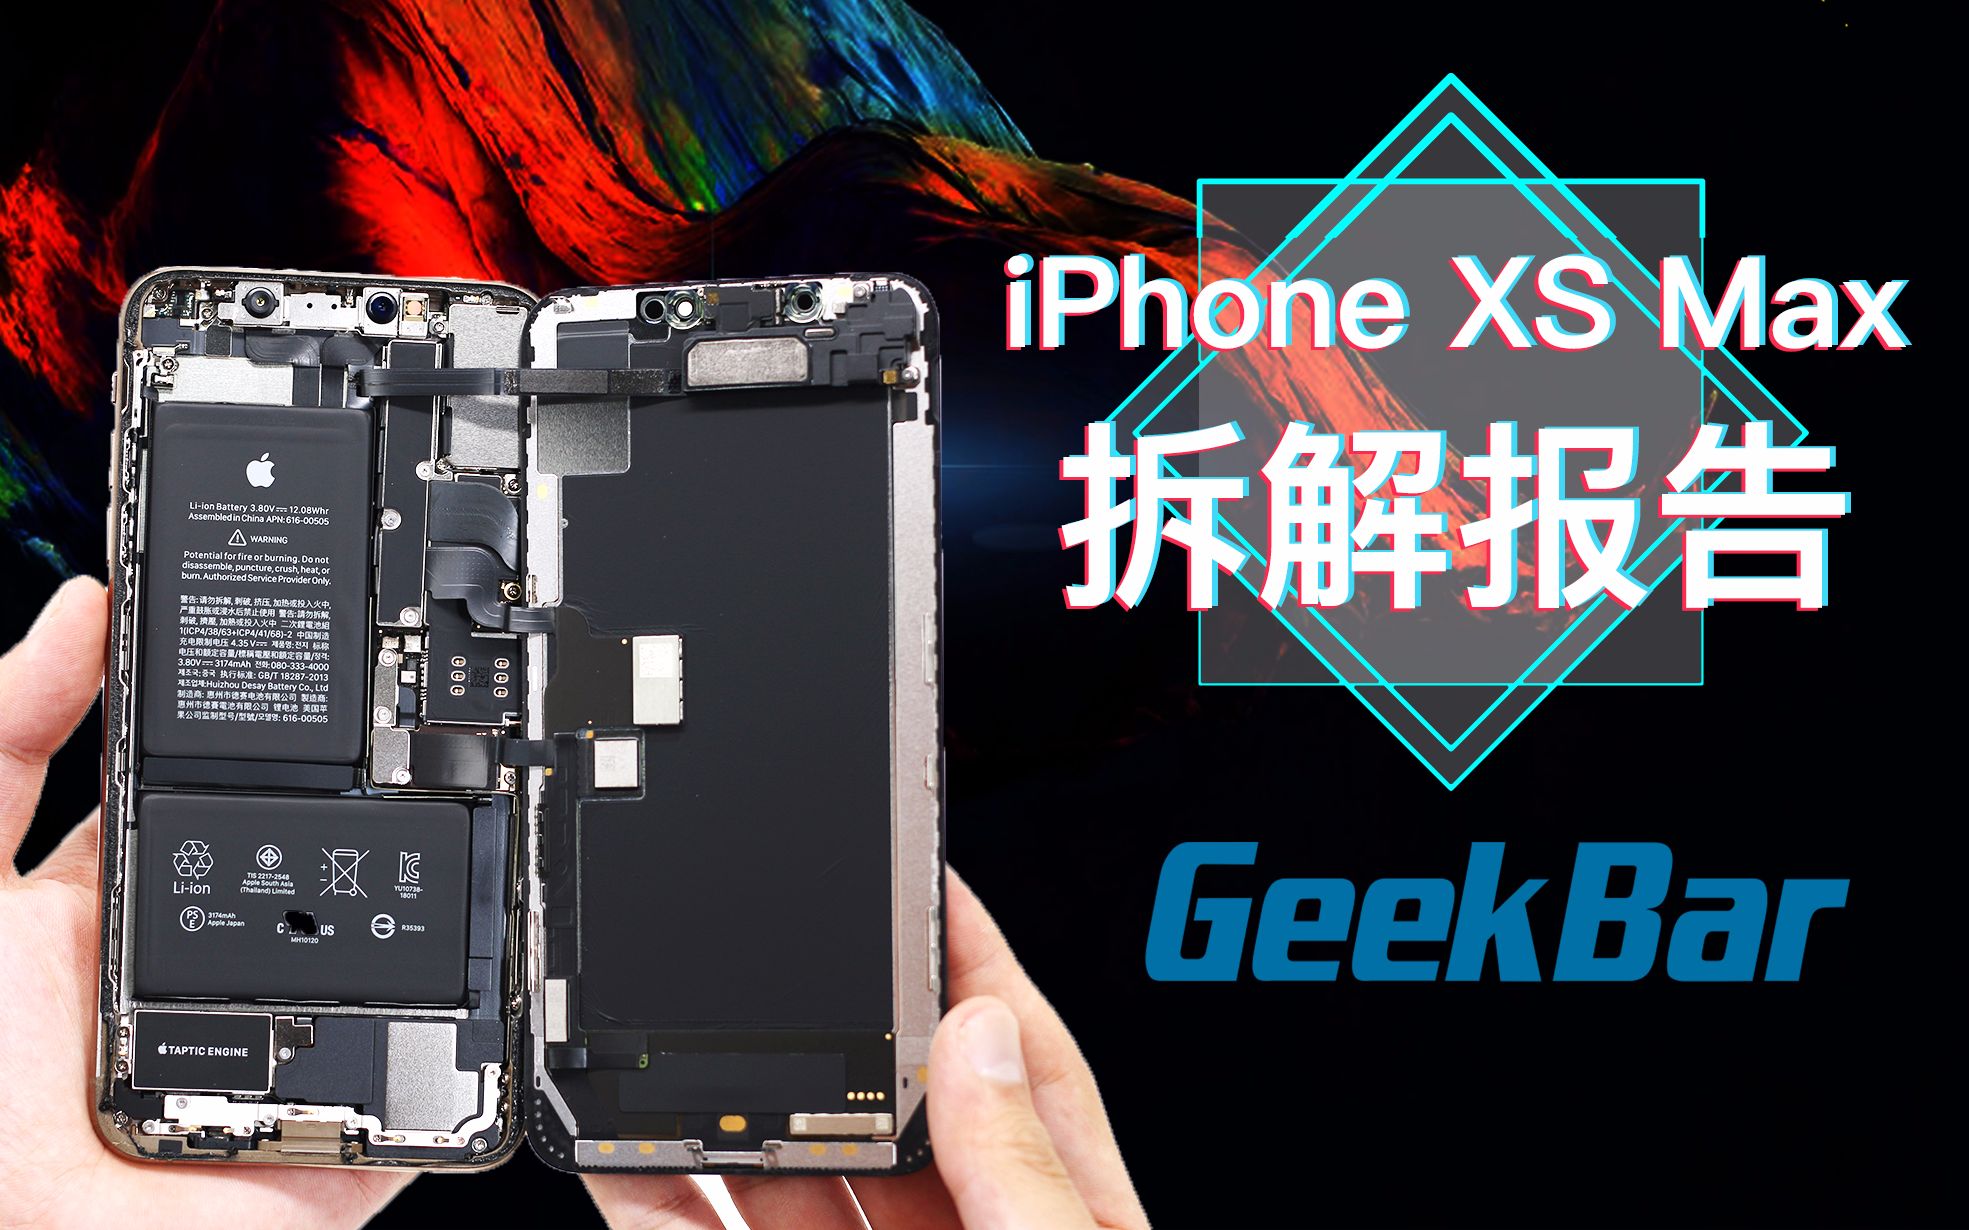 iphone xs max拆解, 双卡使得天线设计异常复杂